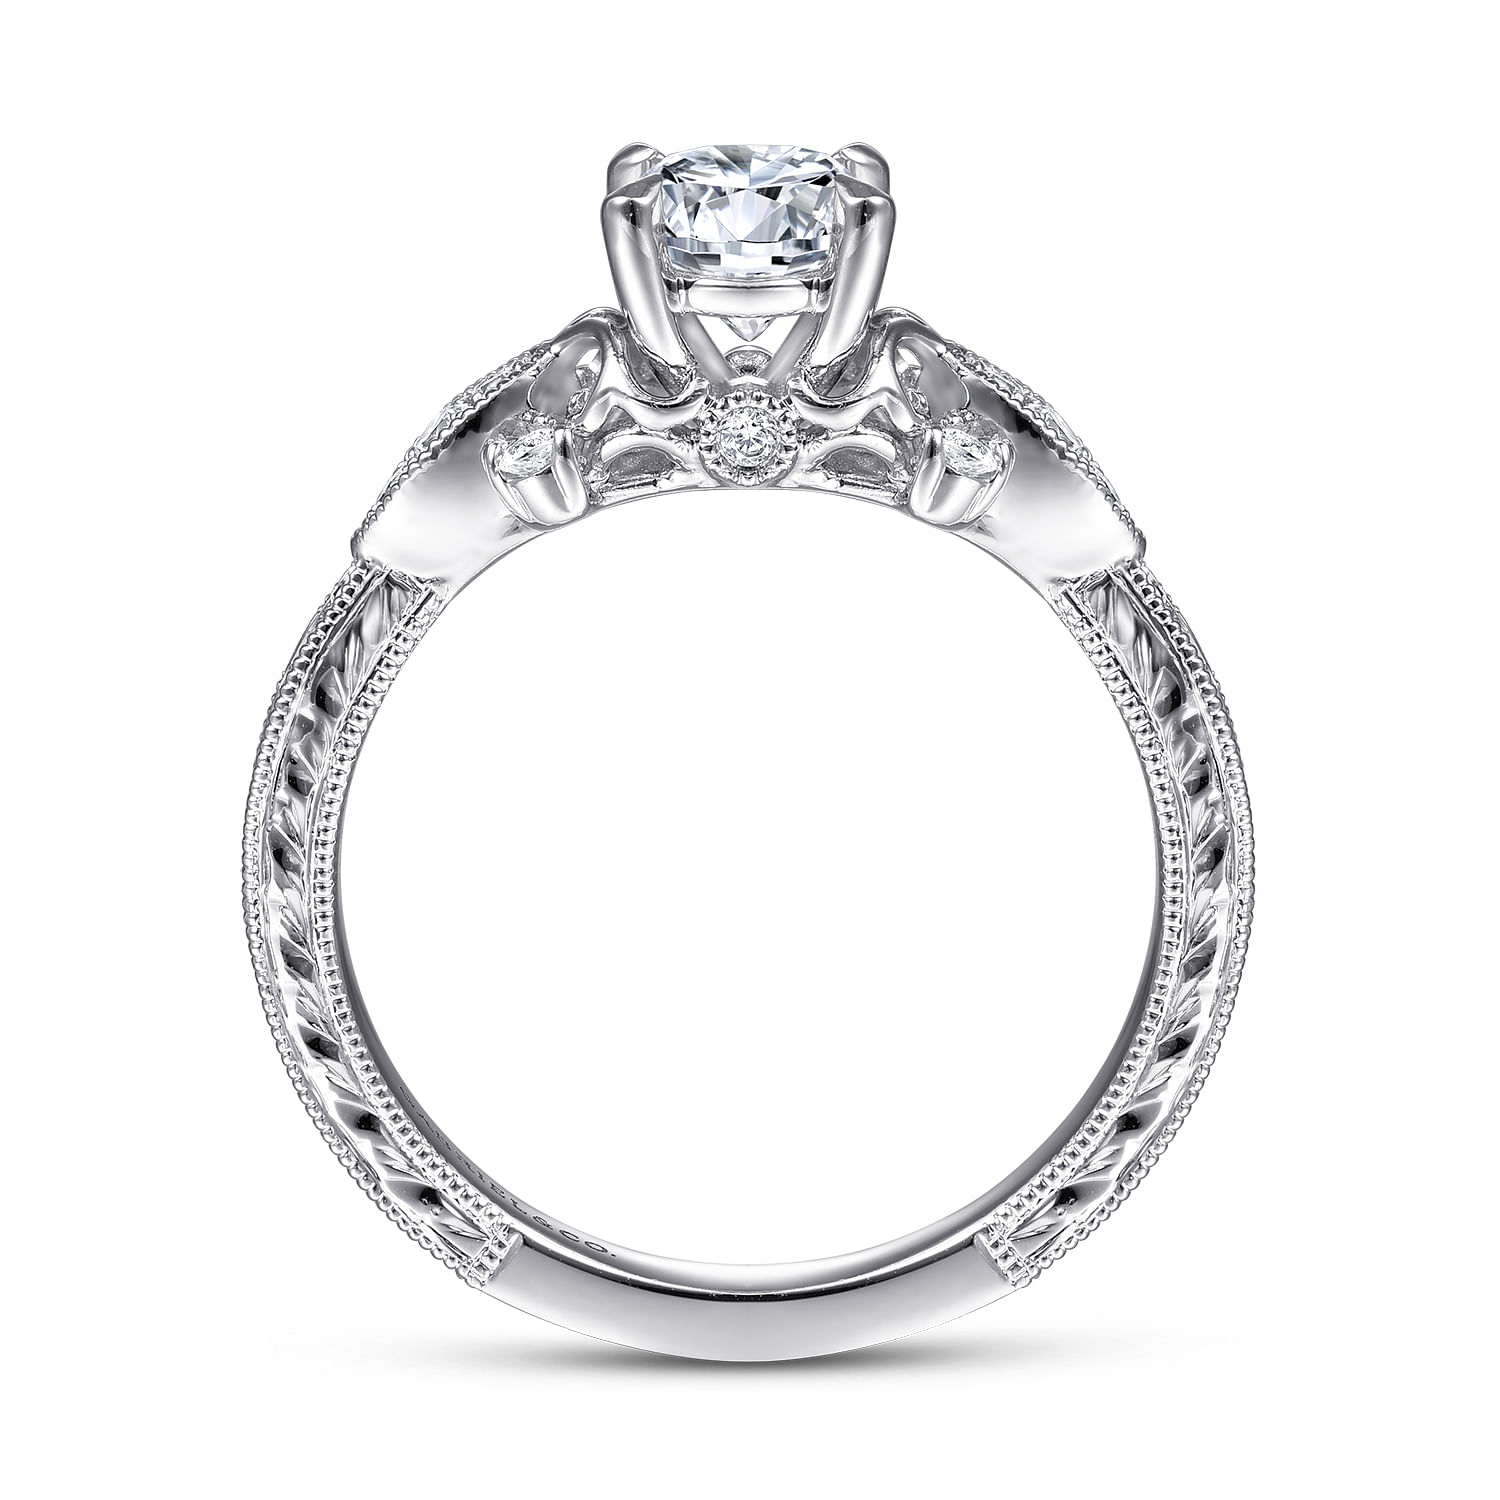 Vintage Inspired 14K White Gold Round Diamond Engagement Ring